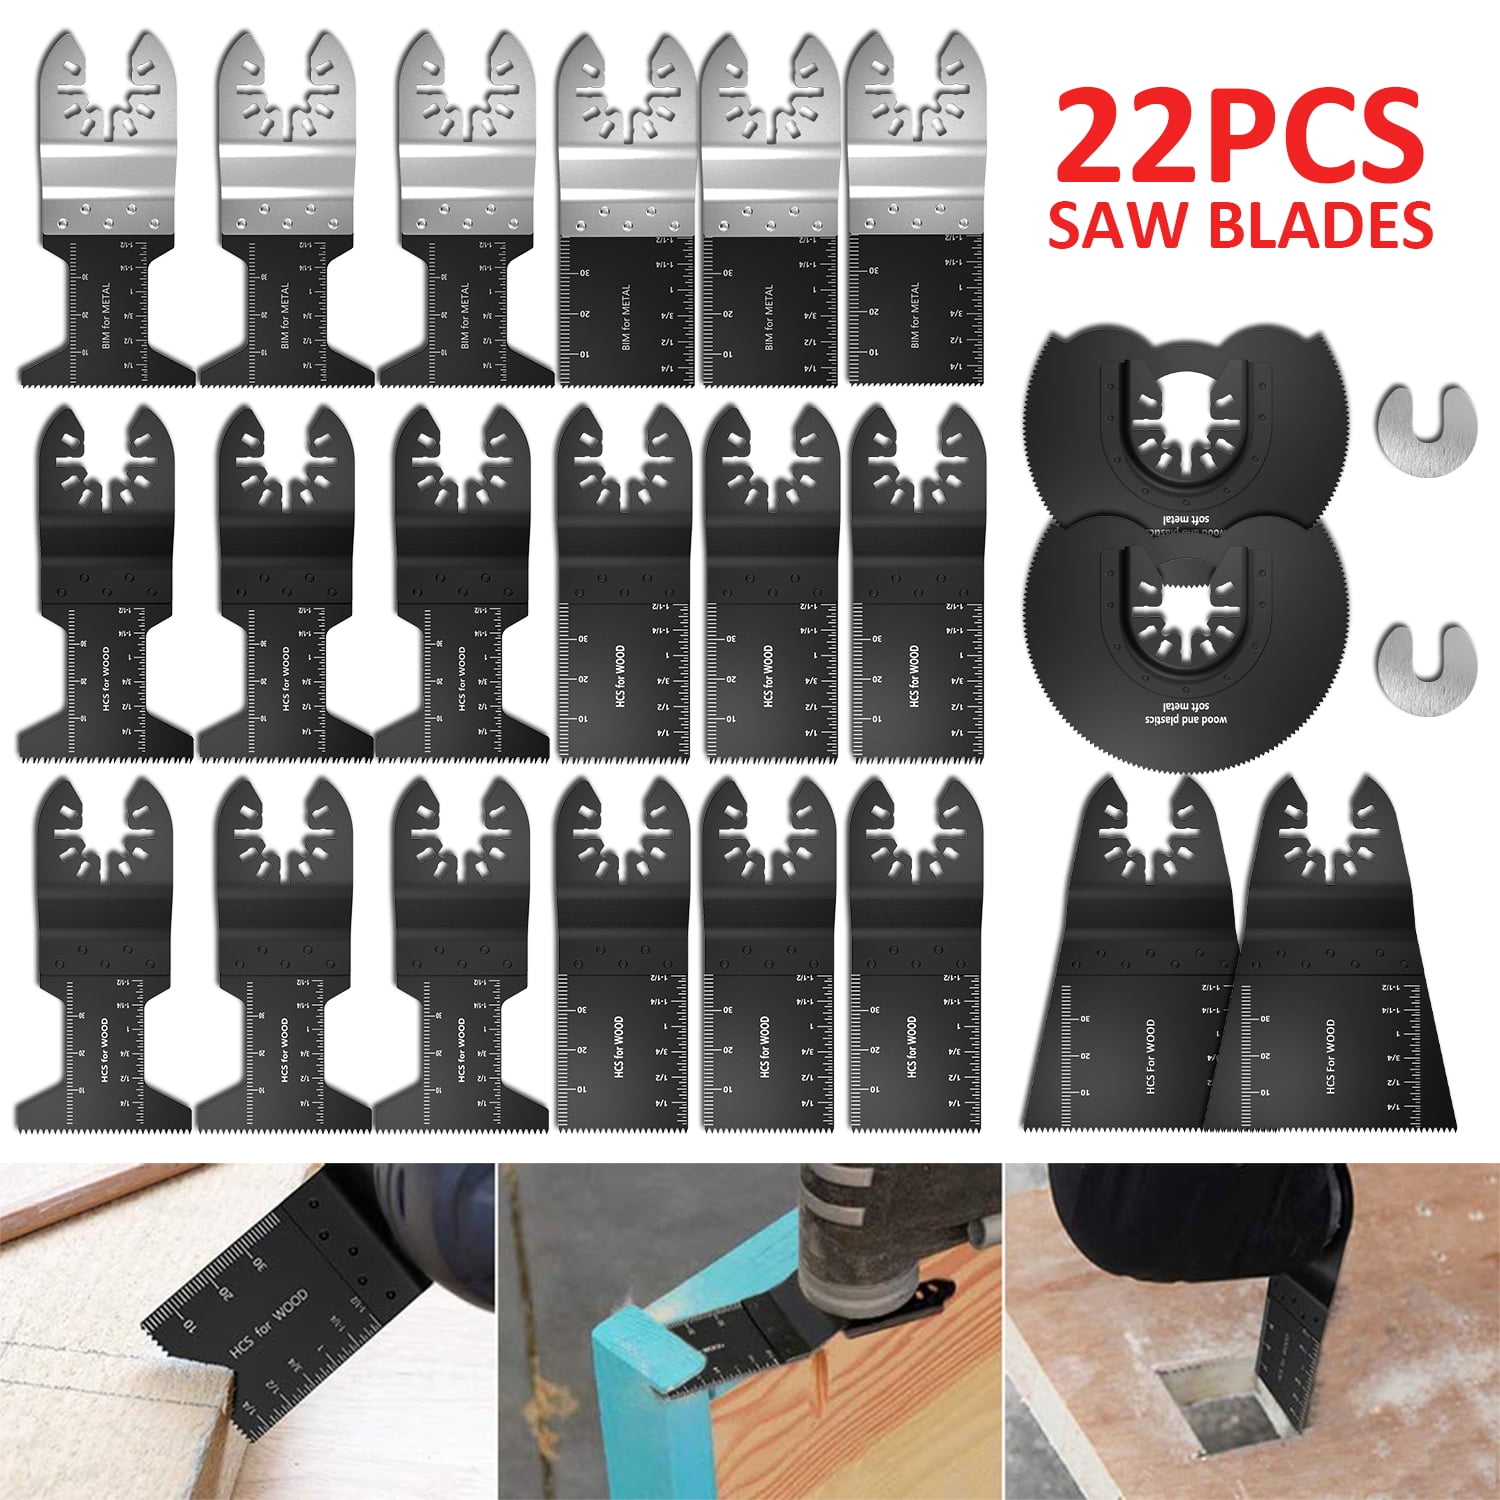 22pcs Oscillating Multi Saw Blades For Fein Multimaster Dewalt Makita Bosch Tool 